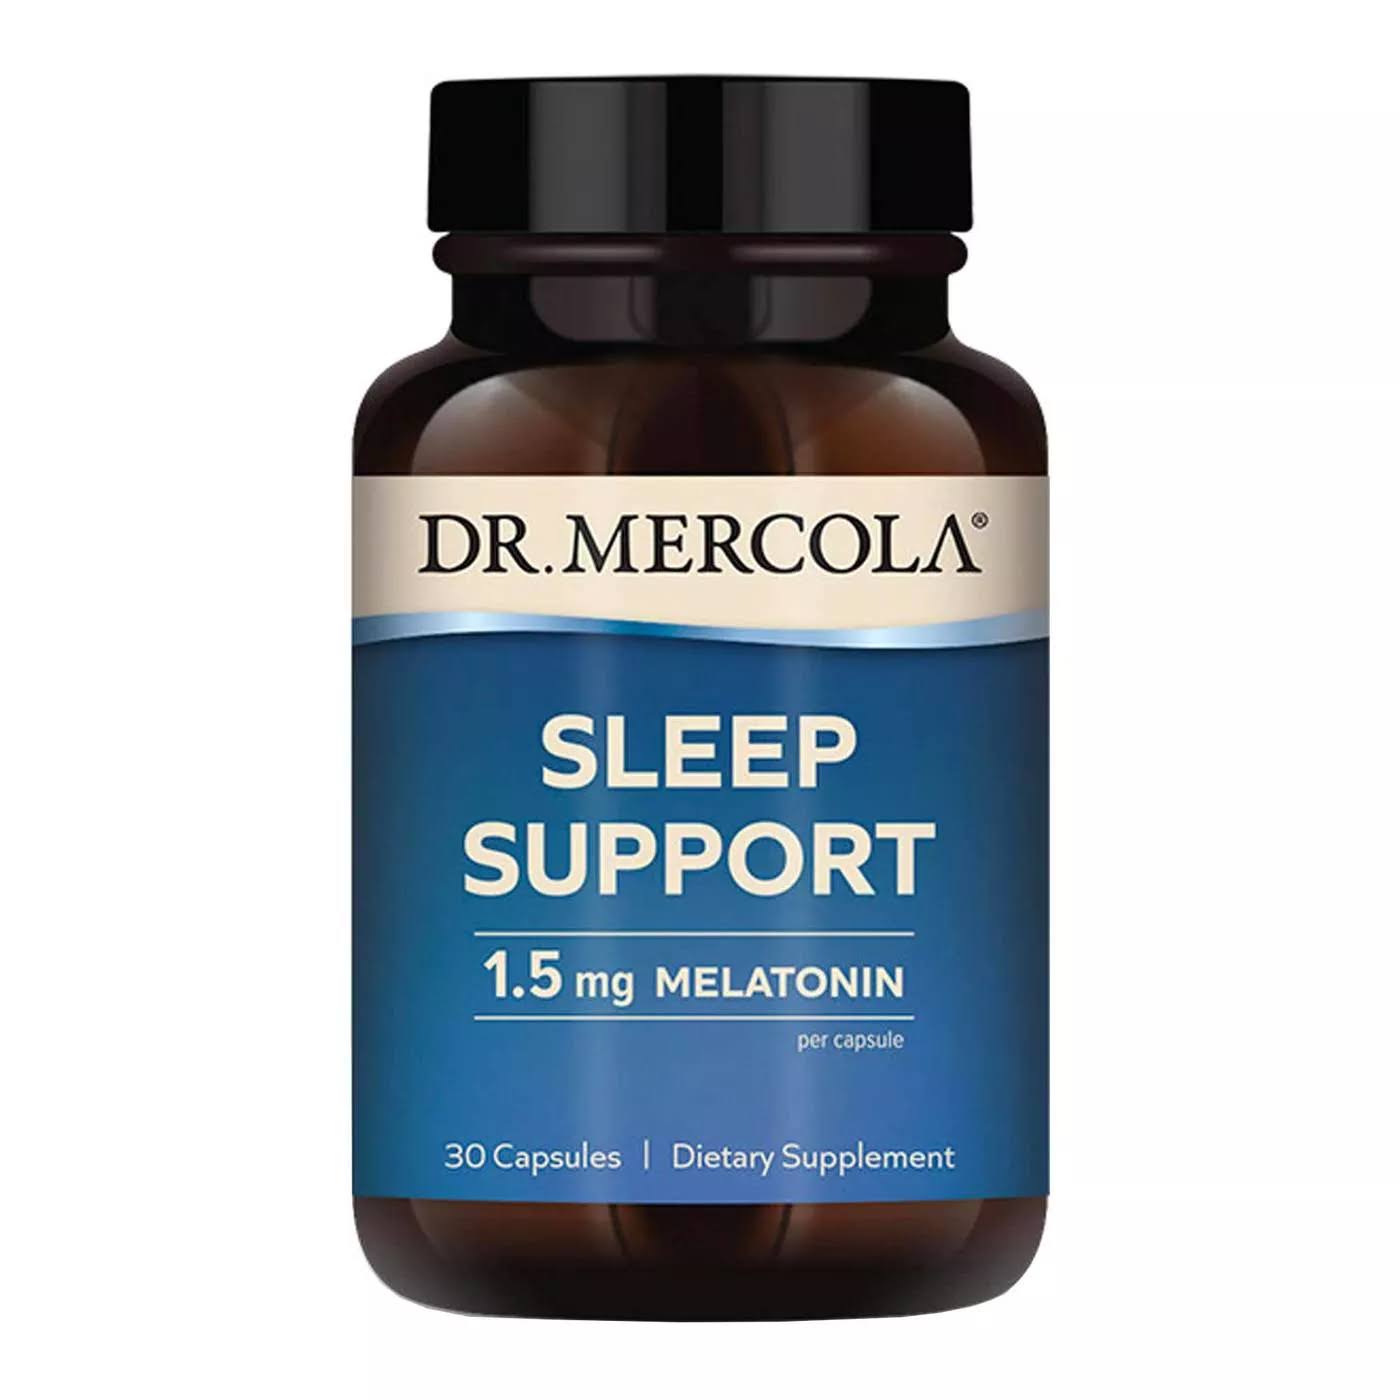 Dr. Mercola Sleep Support with Melatonin 1.5 mg - 30 Capsules